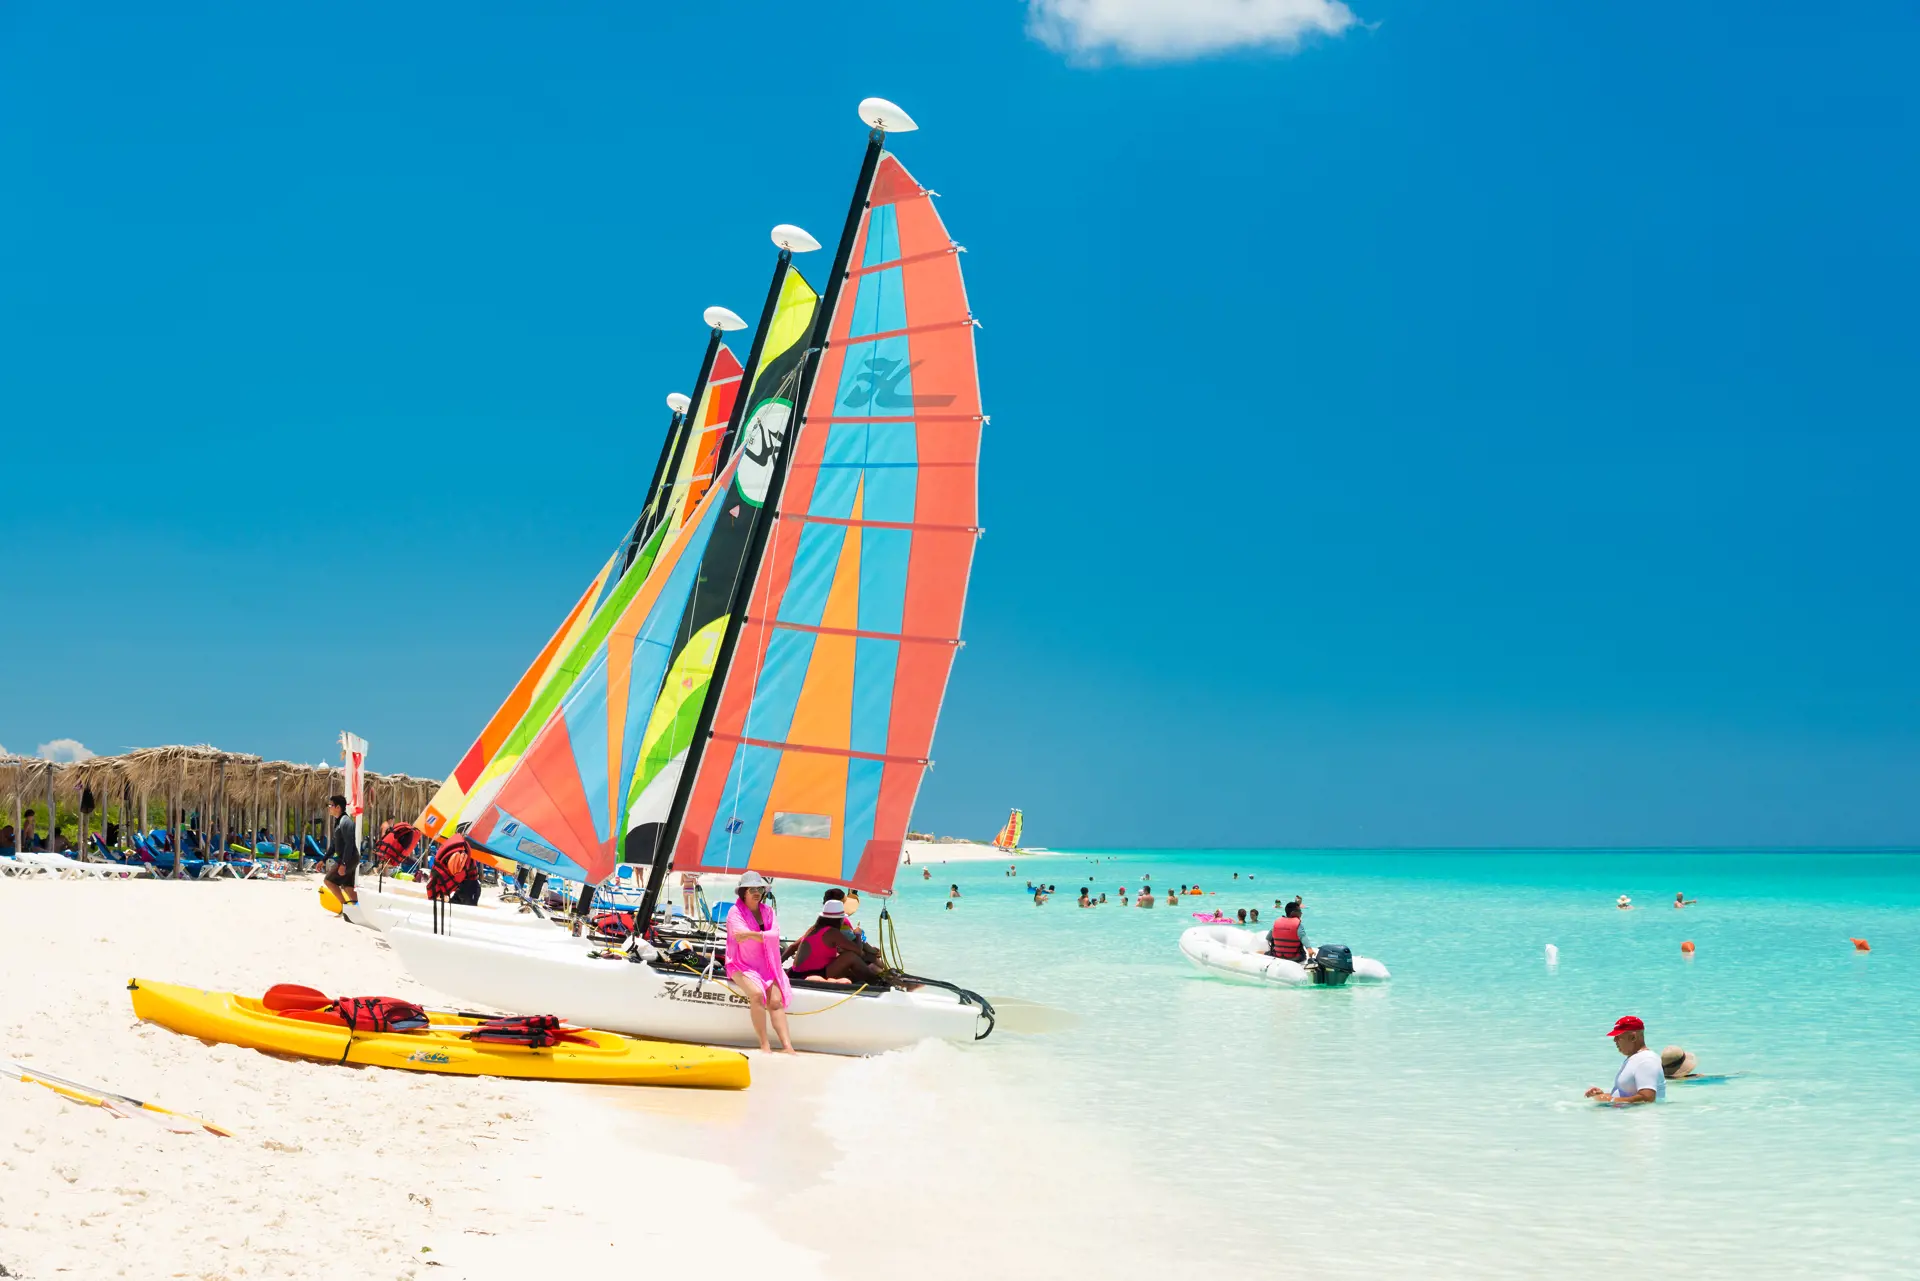 shutterstock_207668812 CAYO SANTA MARIA, CUBA - JULY 16, 2014  Tourists enjoy the beautiful beach with colorful sailboats.jpg (1)